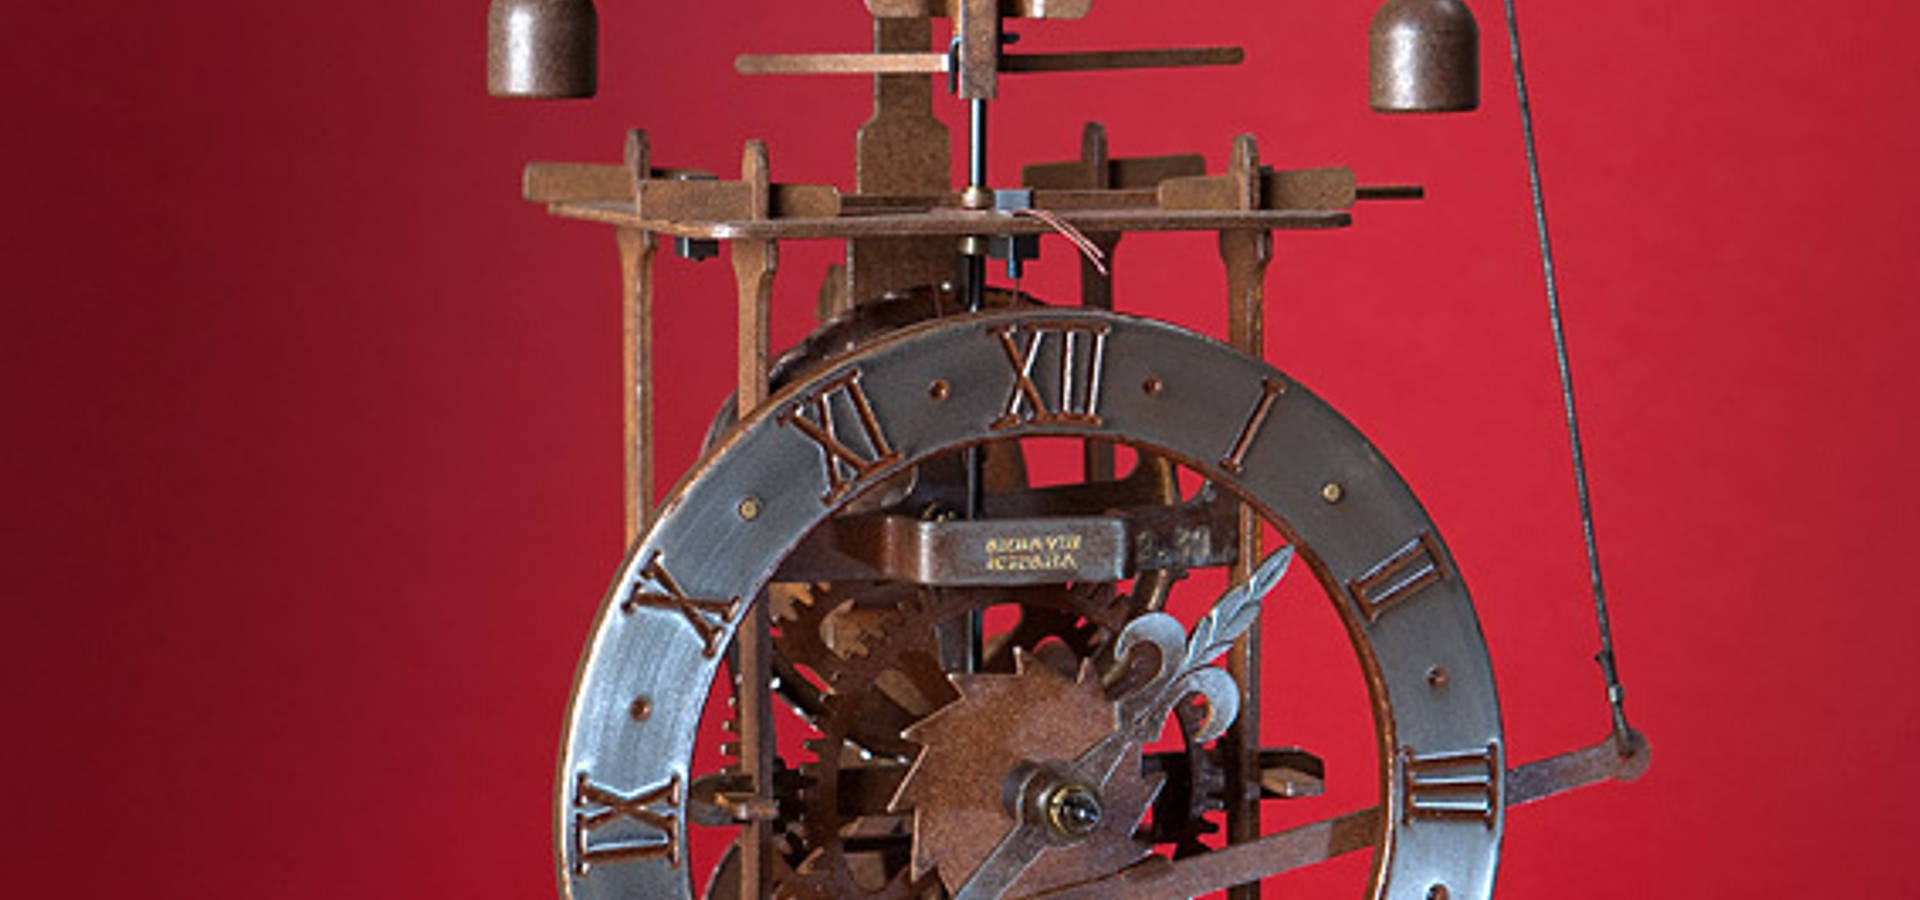 Completorium Oro-Reloj mesa campana dorado-Ardavín Relojes Sig XV